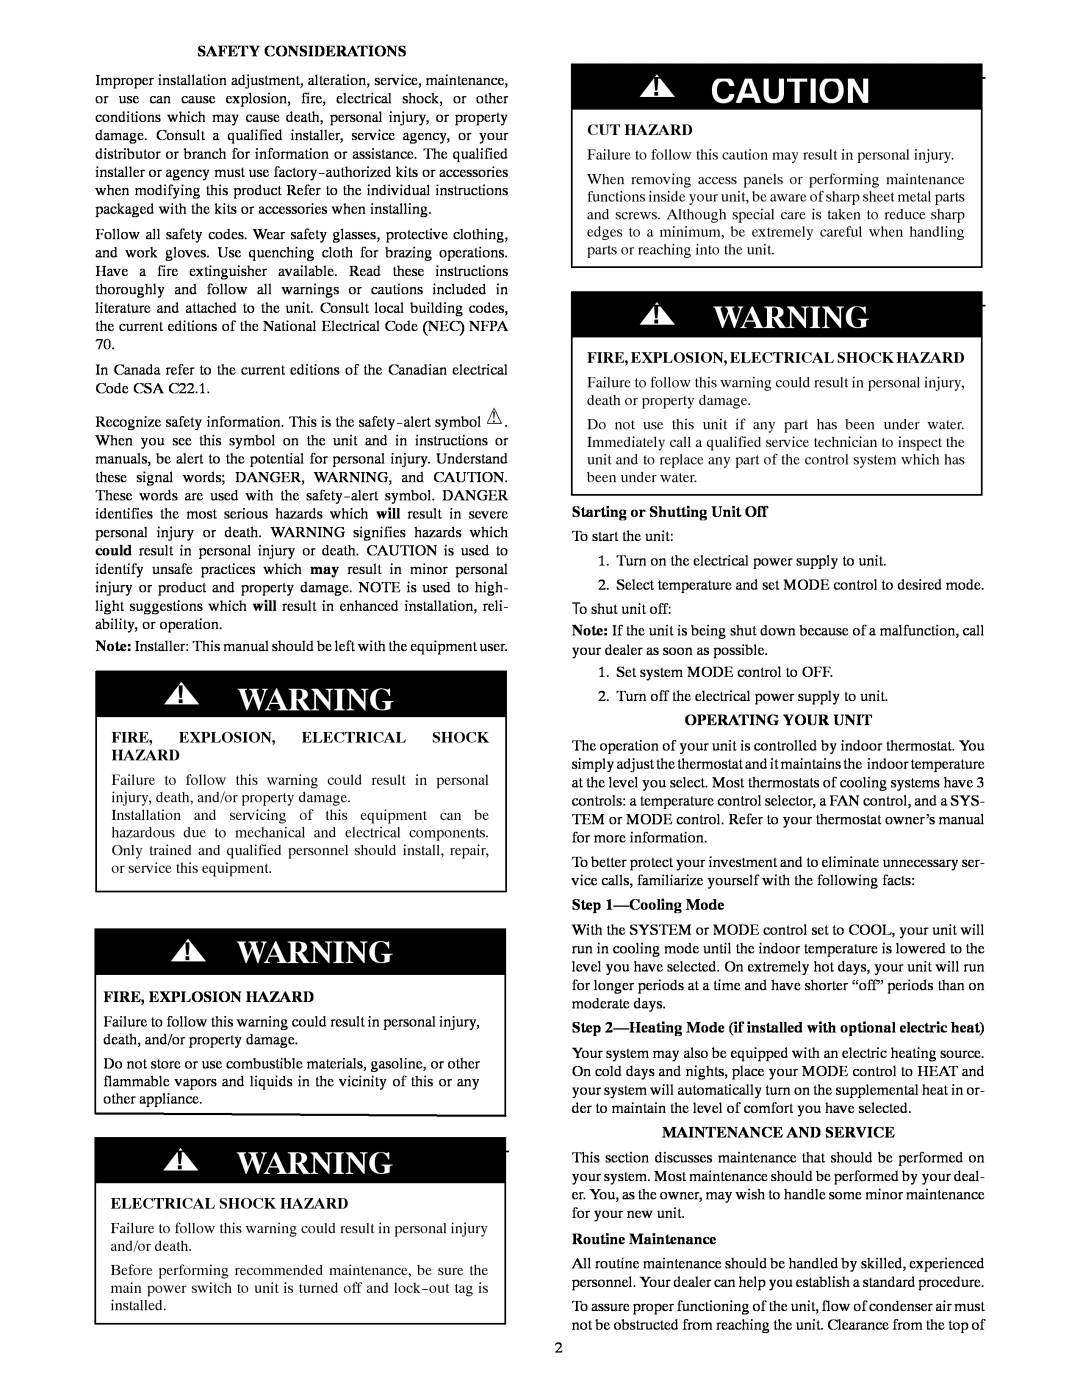 Carrier 50GL-A manual Safety Considerations, Fire, Explosion, Electrical Shock Hazard, Fire, Explosion Hazard, Cut Hazard 